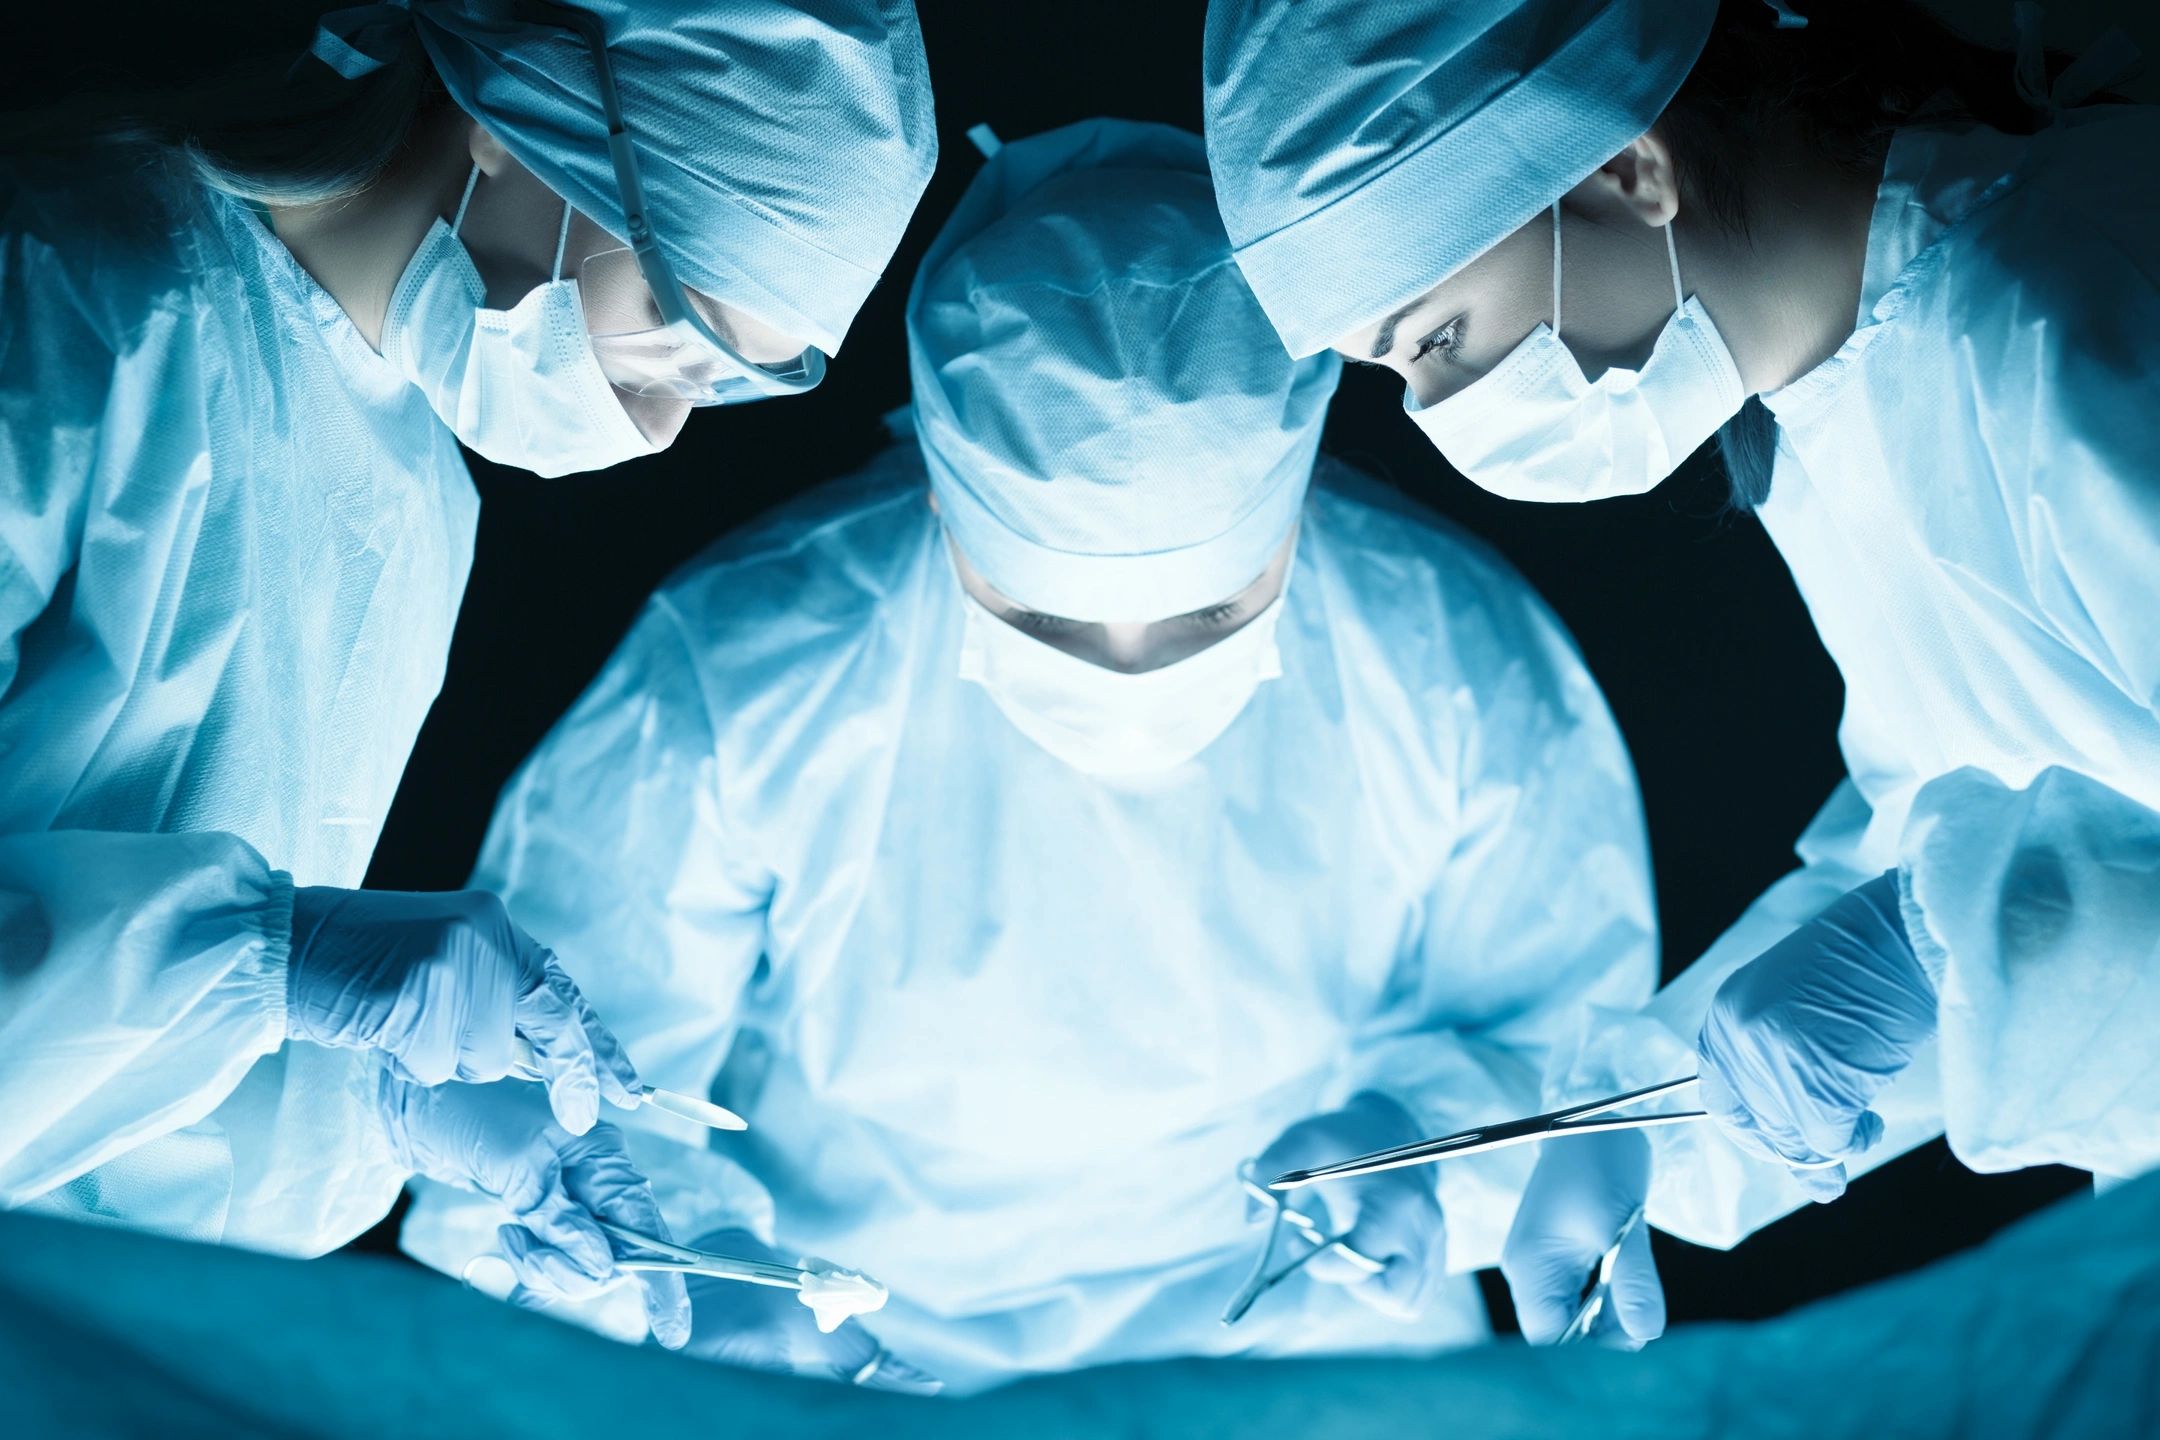 Doctors performing complex surgery